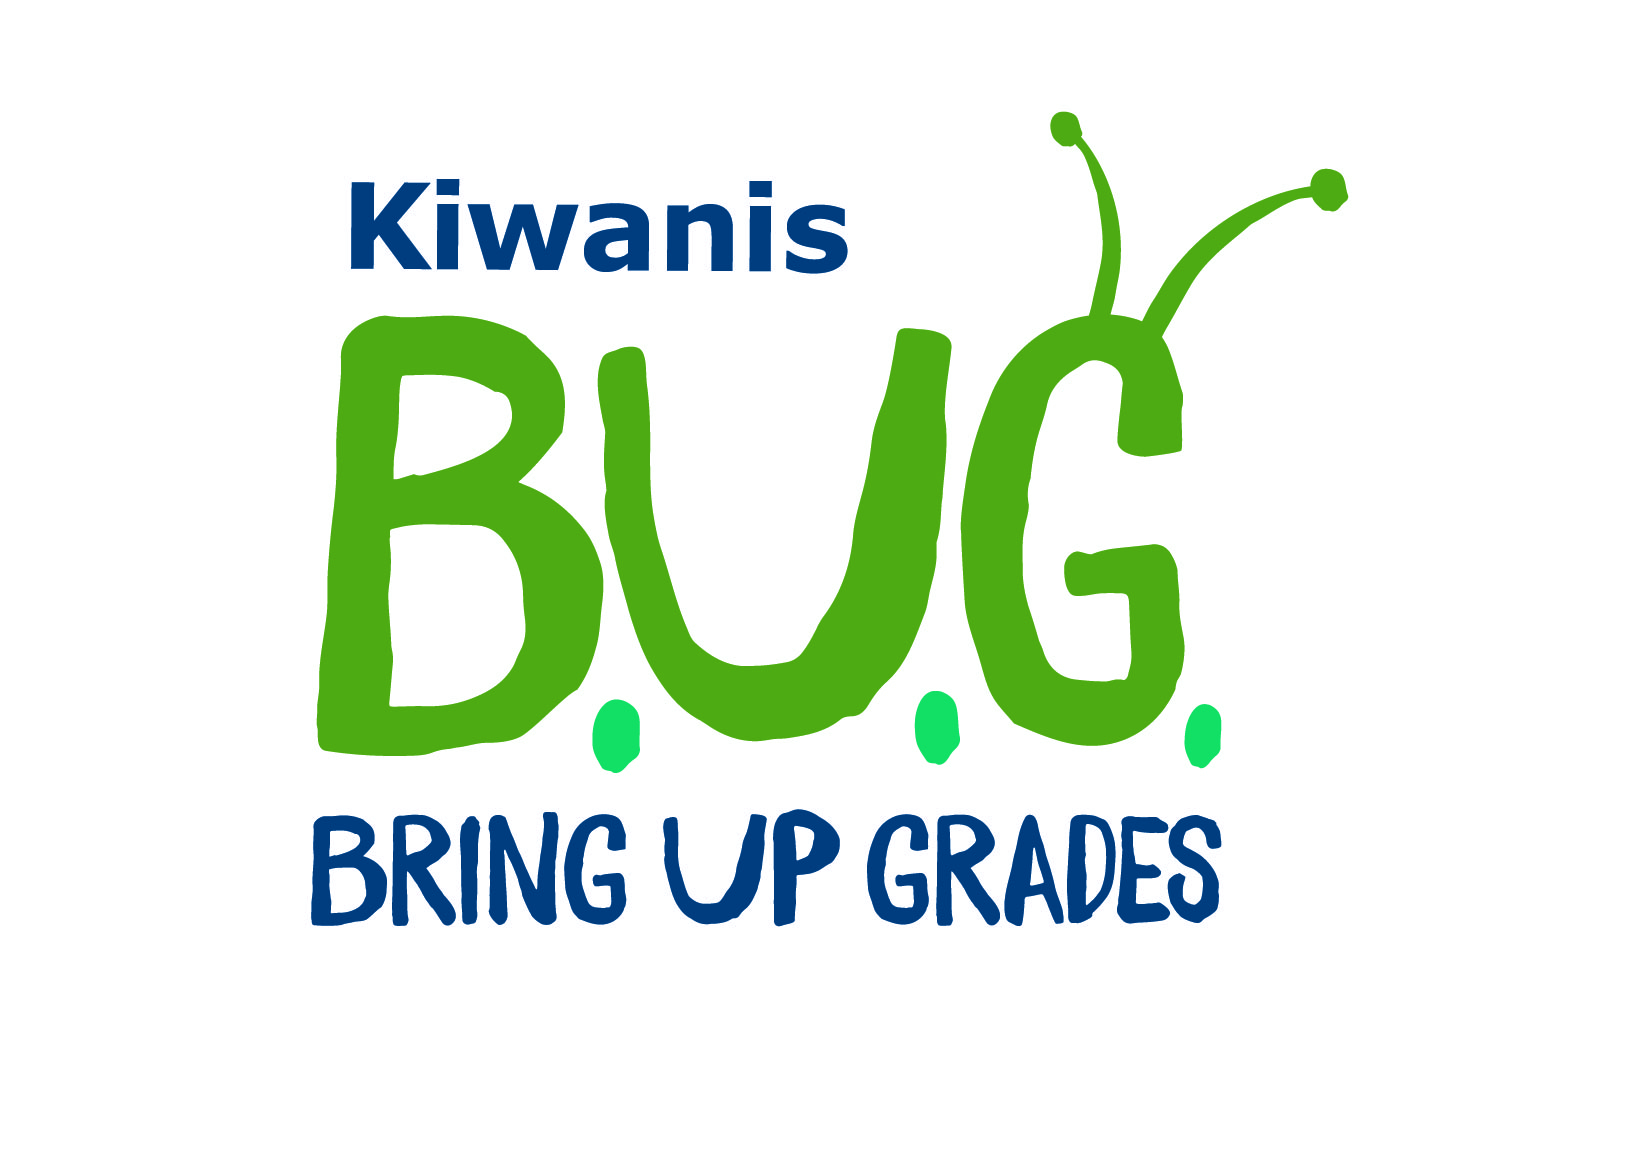 BUG - Bring Up Grades